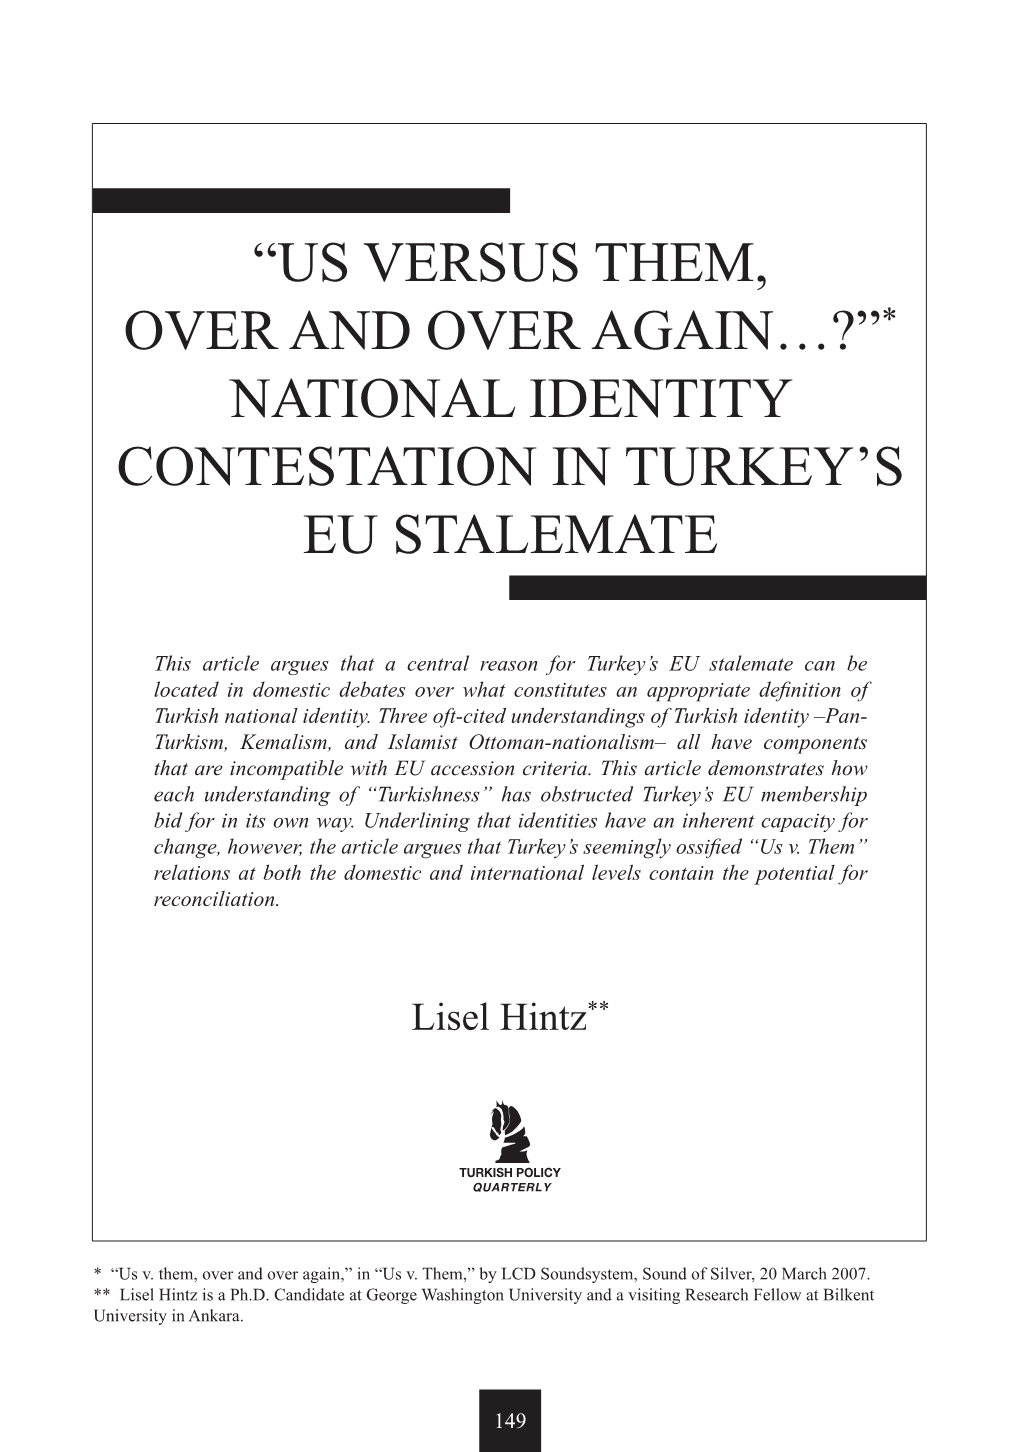 National Identity Contestation in Turkey's Eu